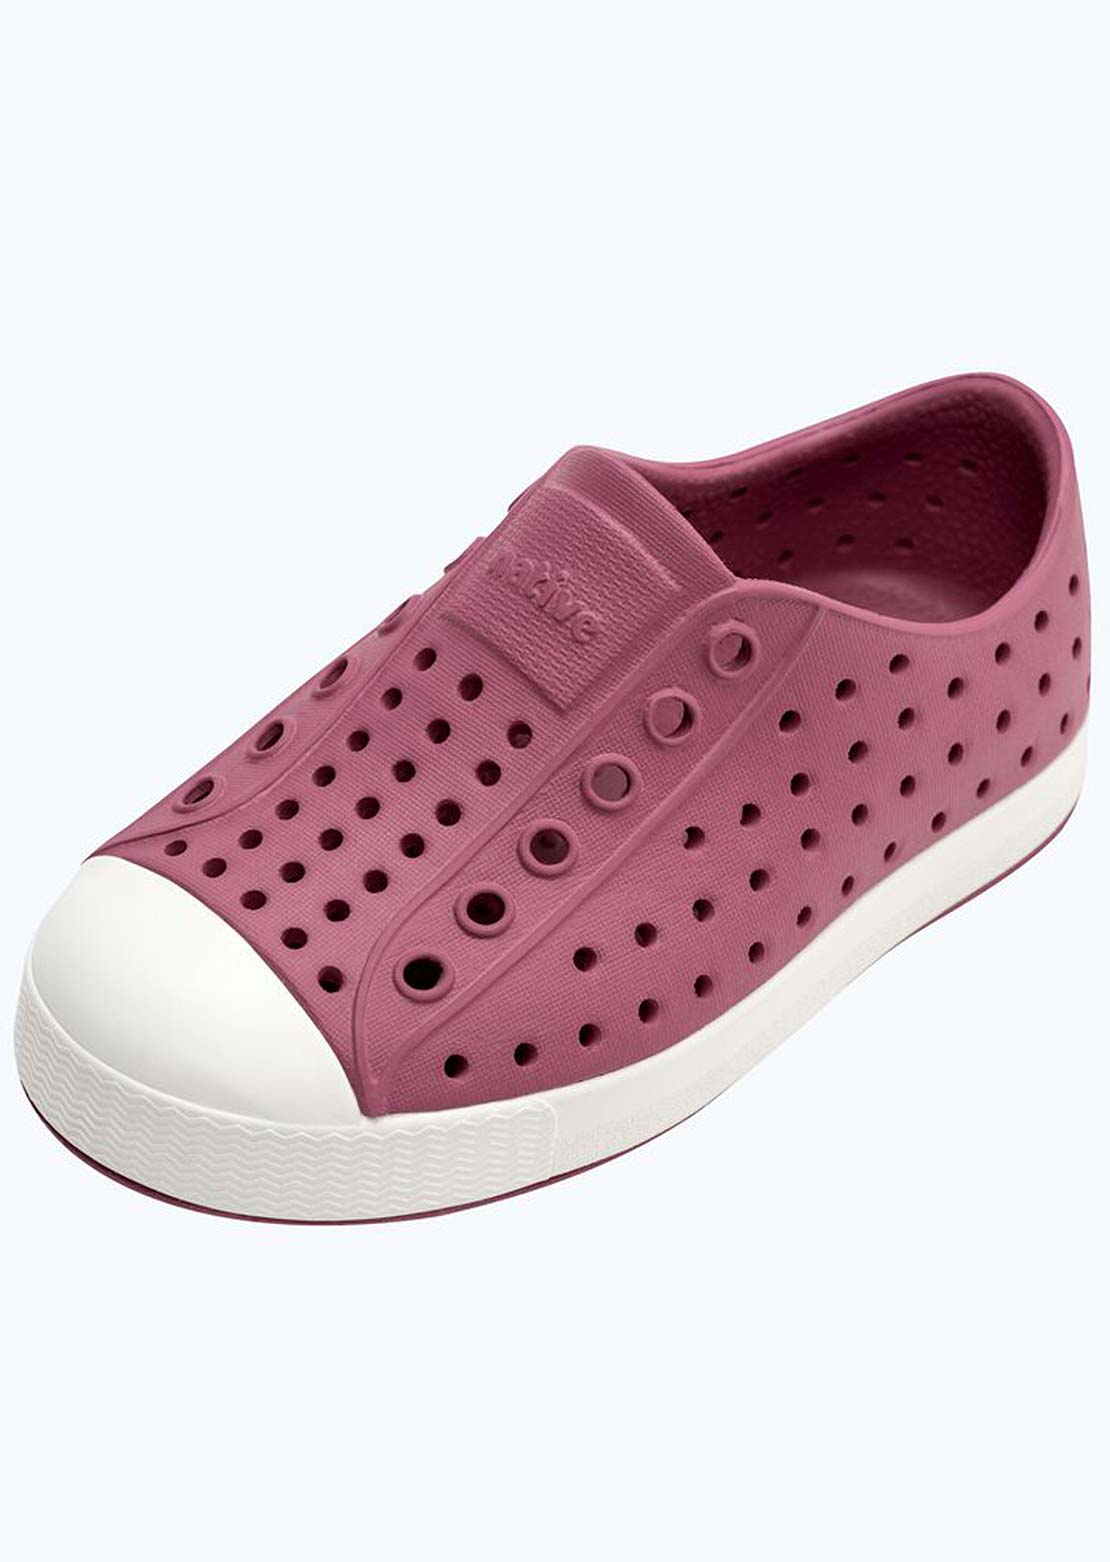 Native Junior Jefferson Shoes Twilight Pink/Shell White